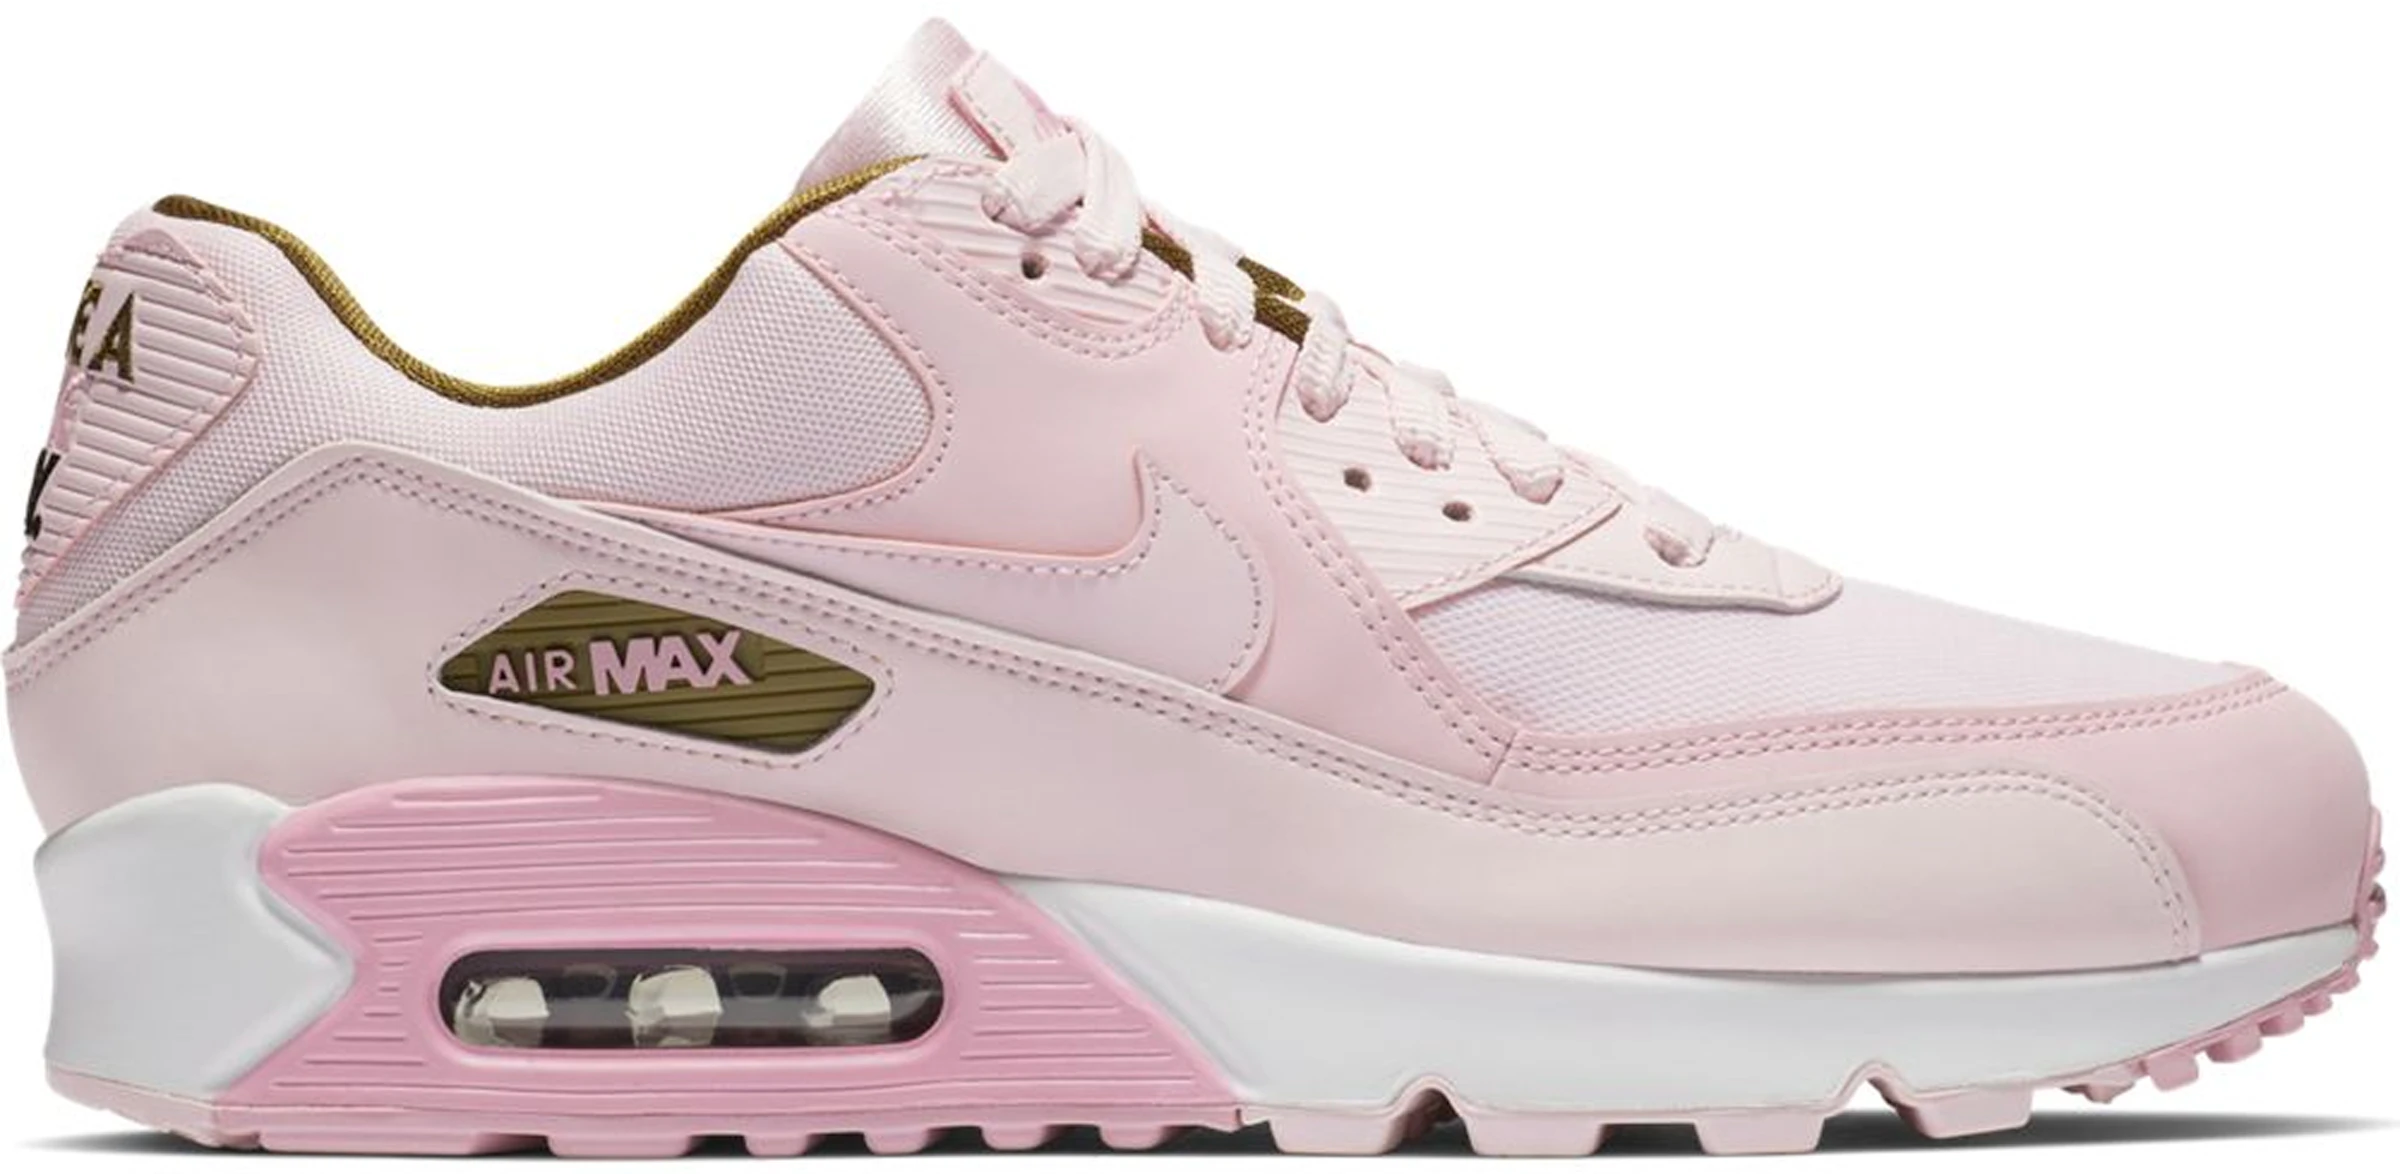 Prooi Motivatie blozen Nike Air Max 90 Have a Nike Day Pink Foam (Women's) - 881105-605 - US